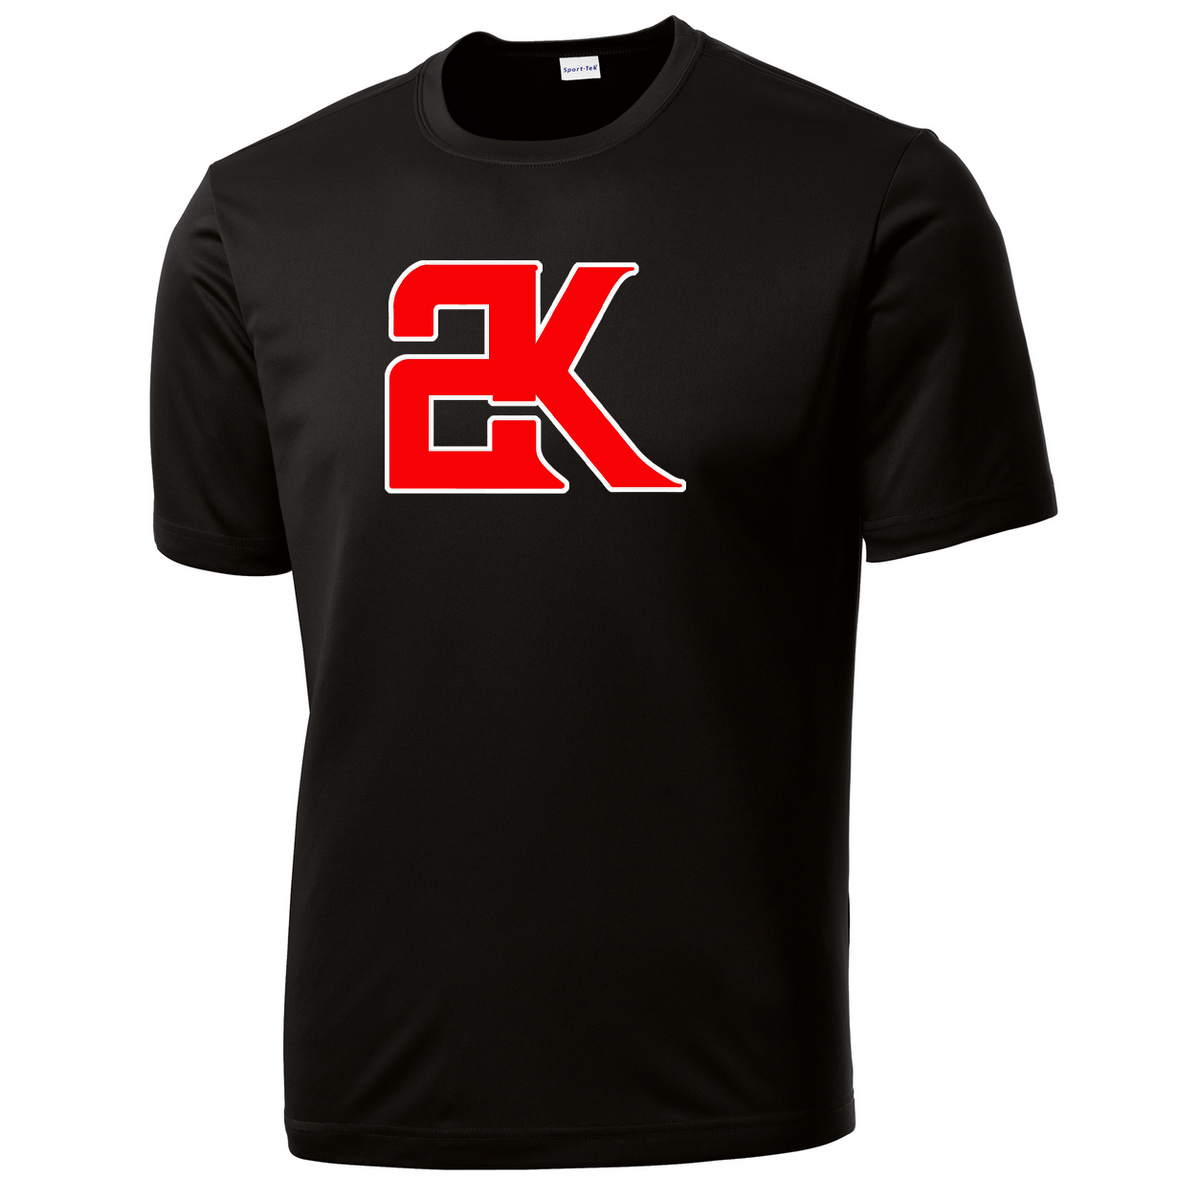 2K Softball Performance T-Shirt